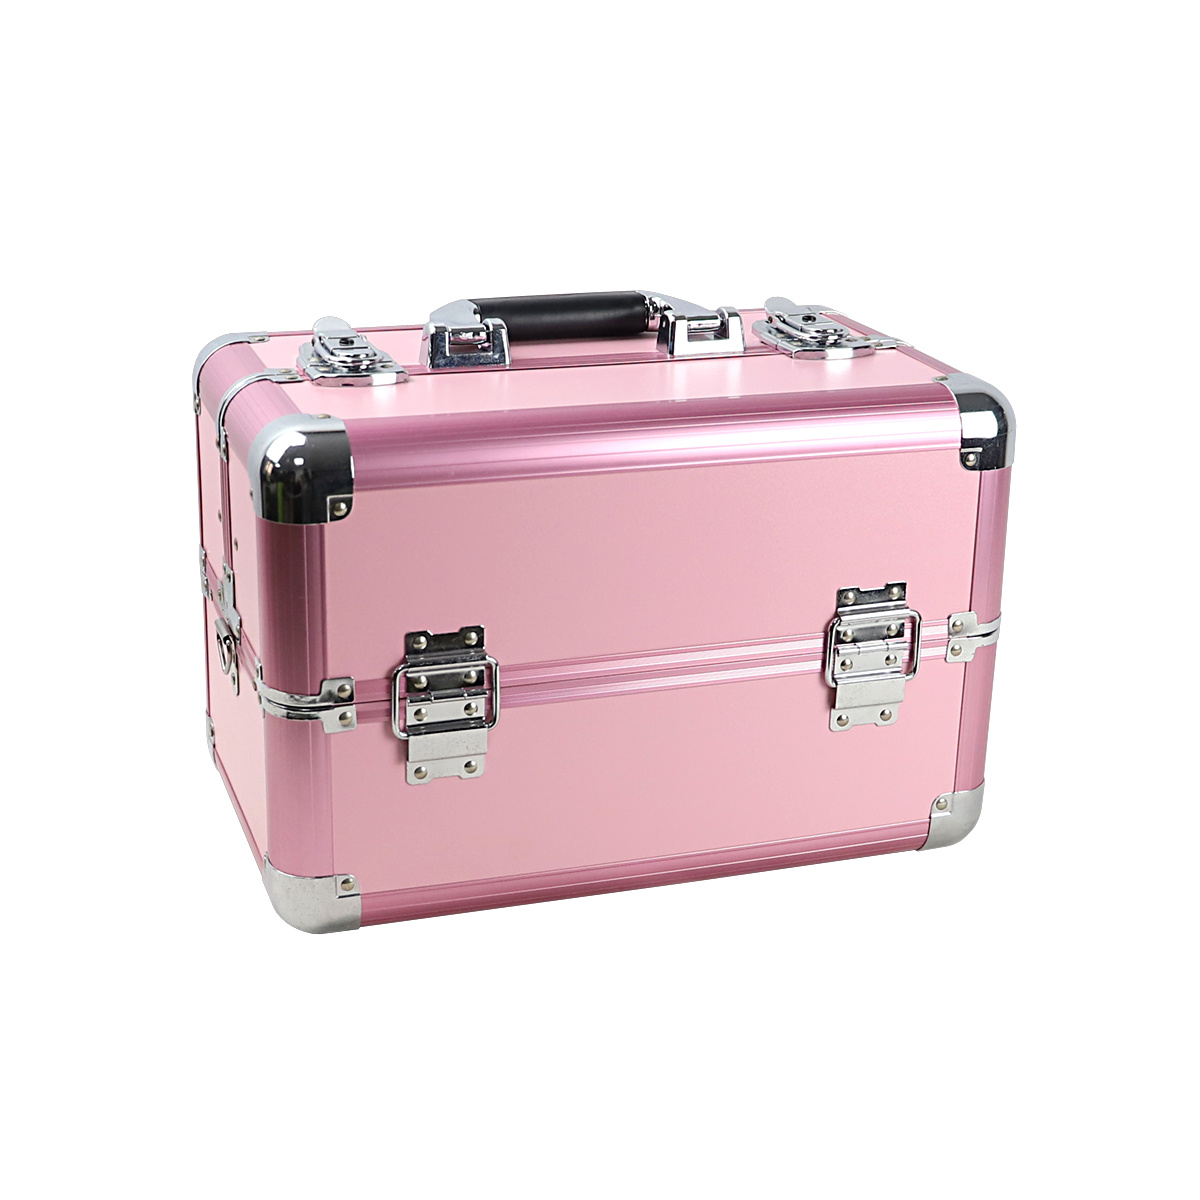 ledematen Giet toegang Aluminium koffer Licht Roze/Showroom/Beauty case/Make-up koffer -  Megabeautyshop.nl